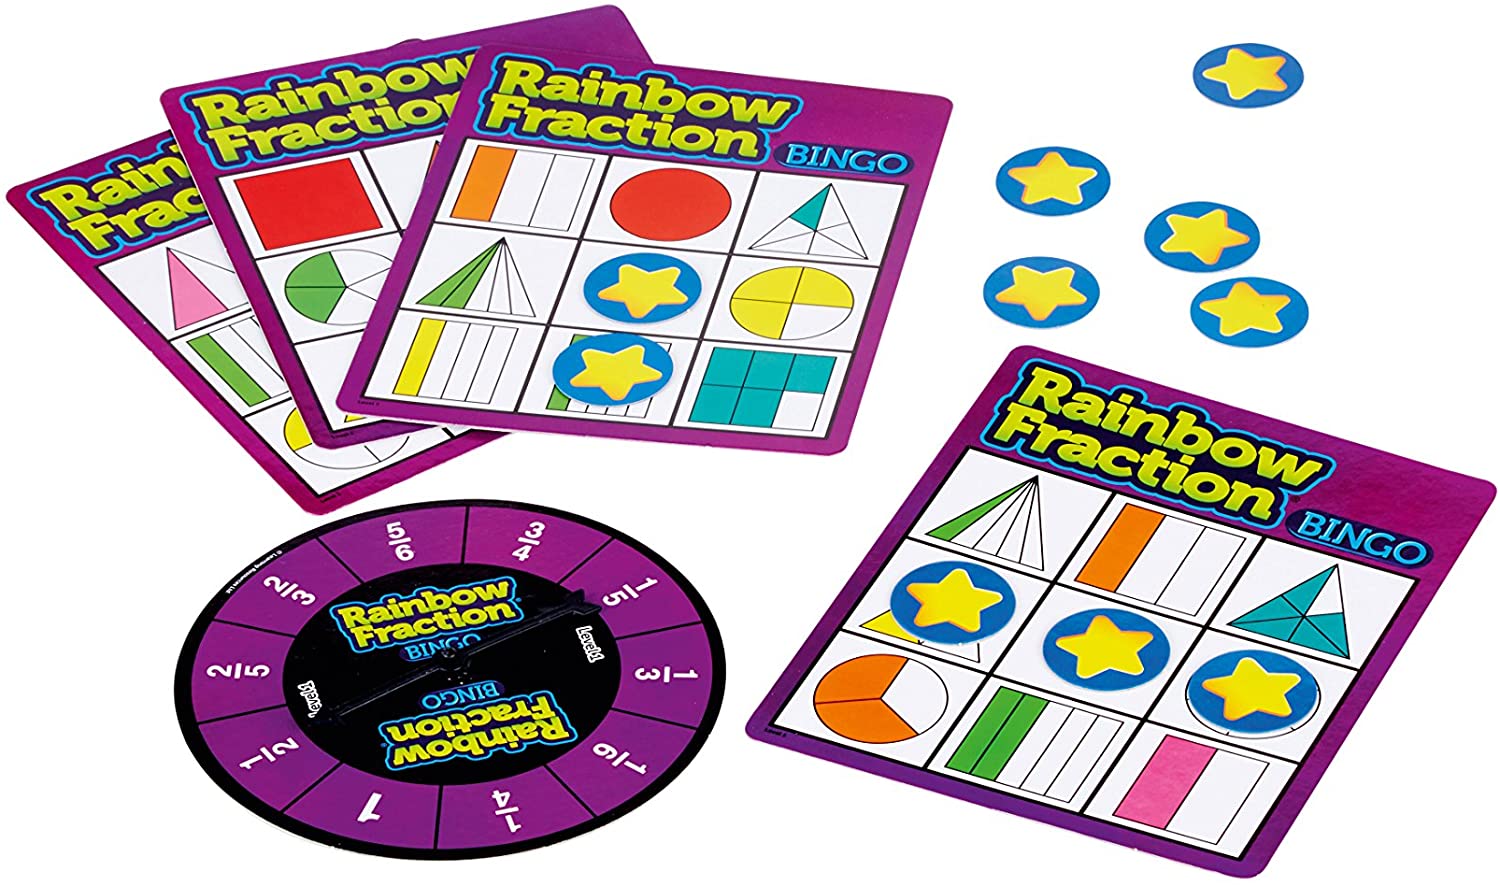 Rainbow Fraction Bingo